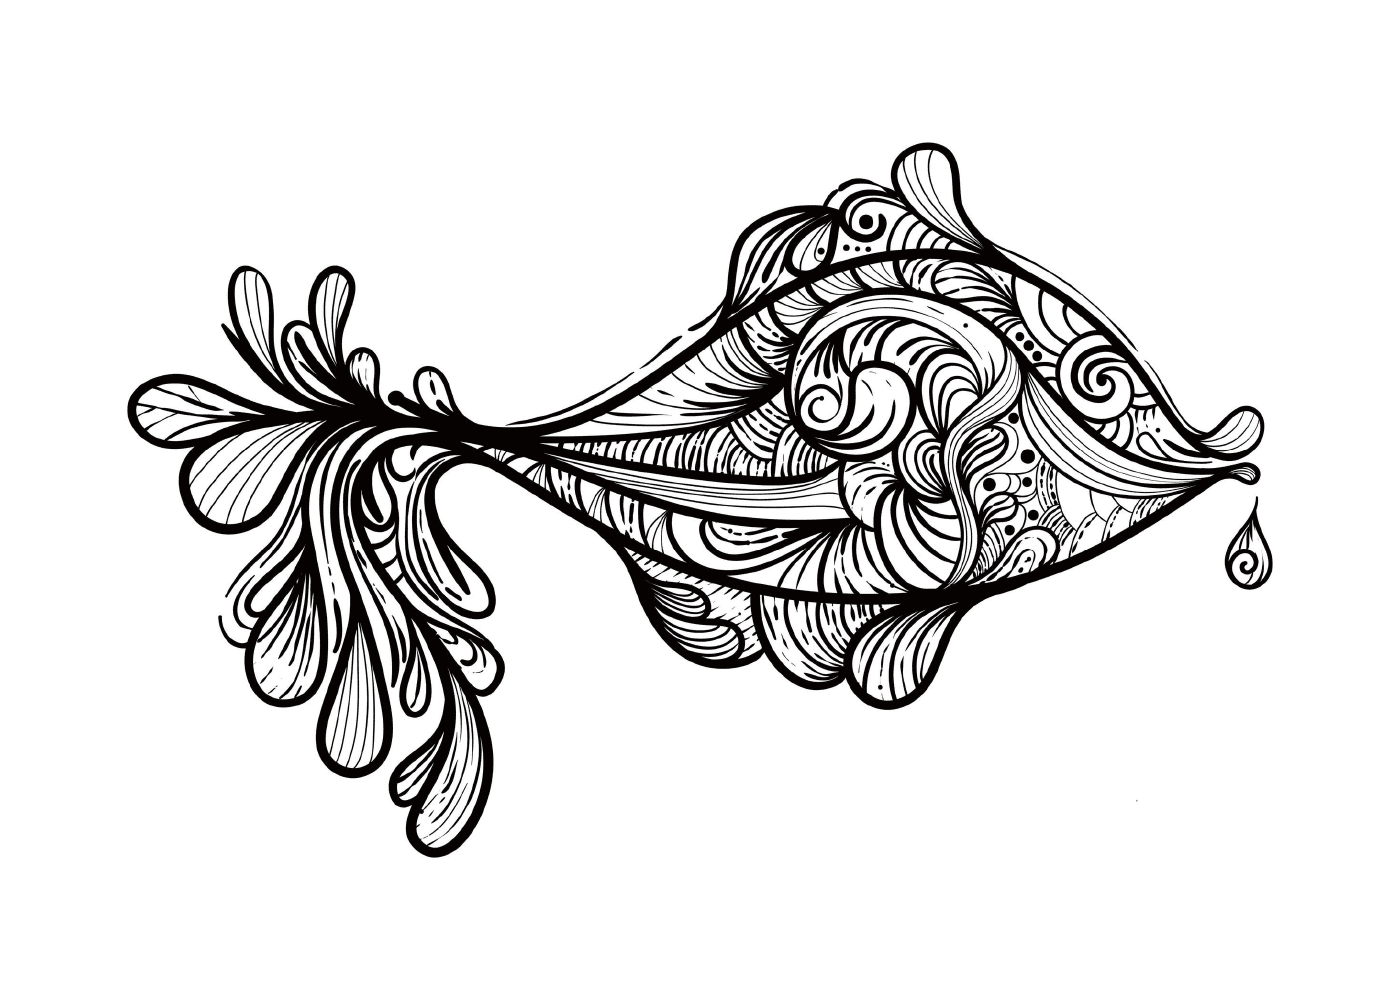  Рыба с кружящимися узлами 